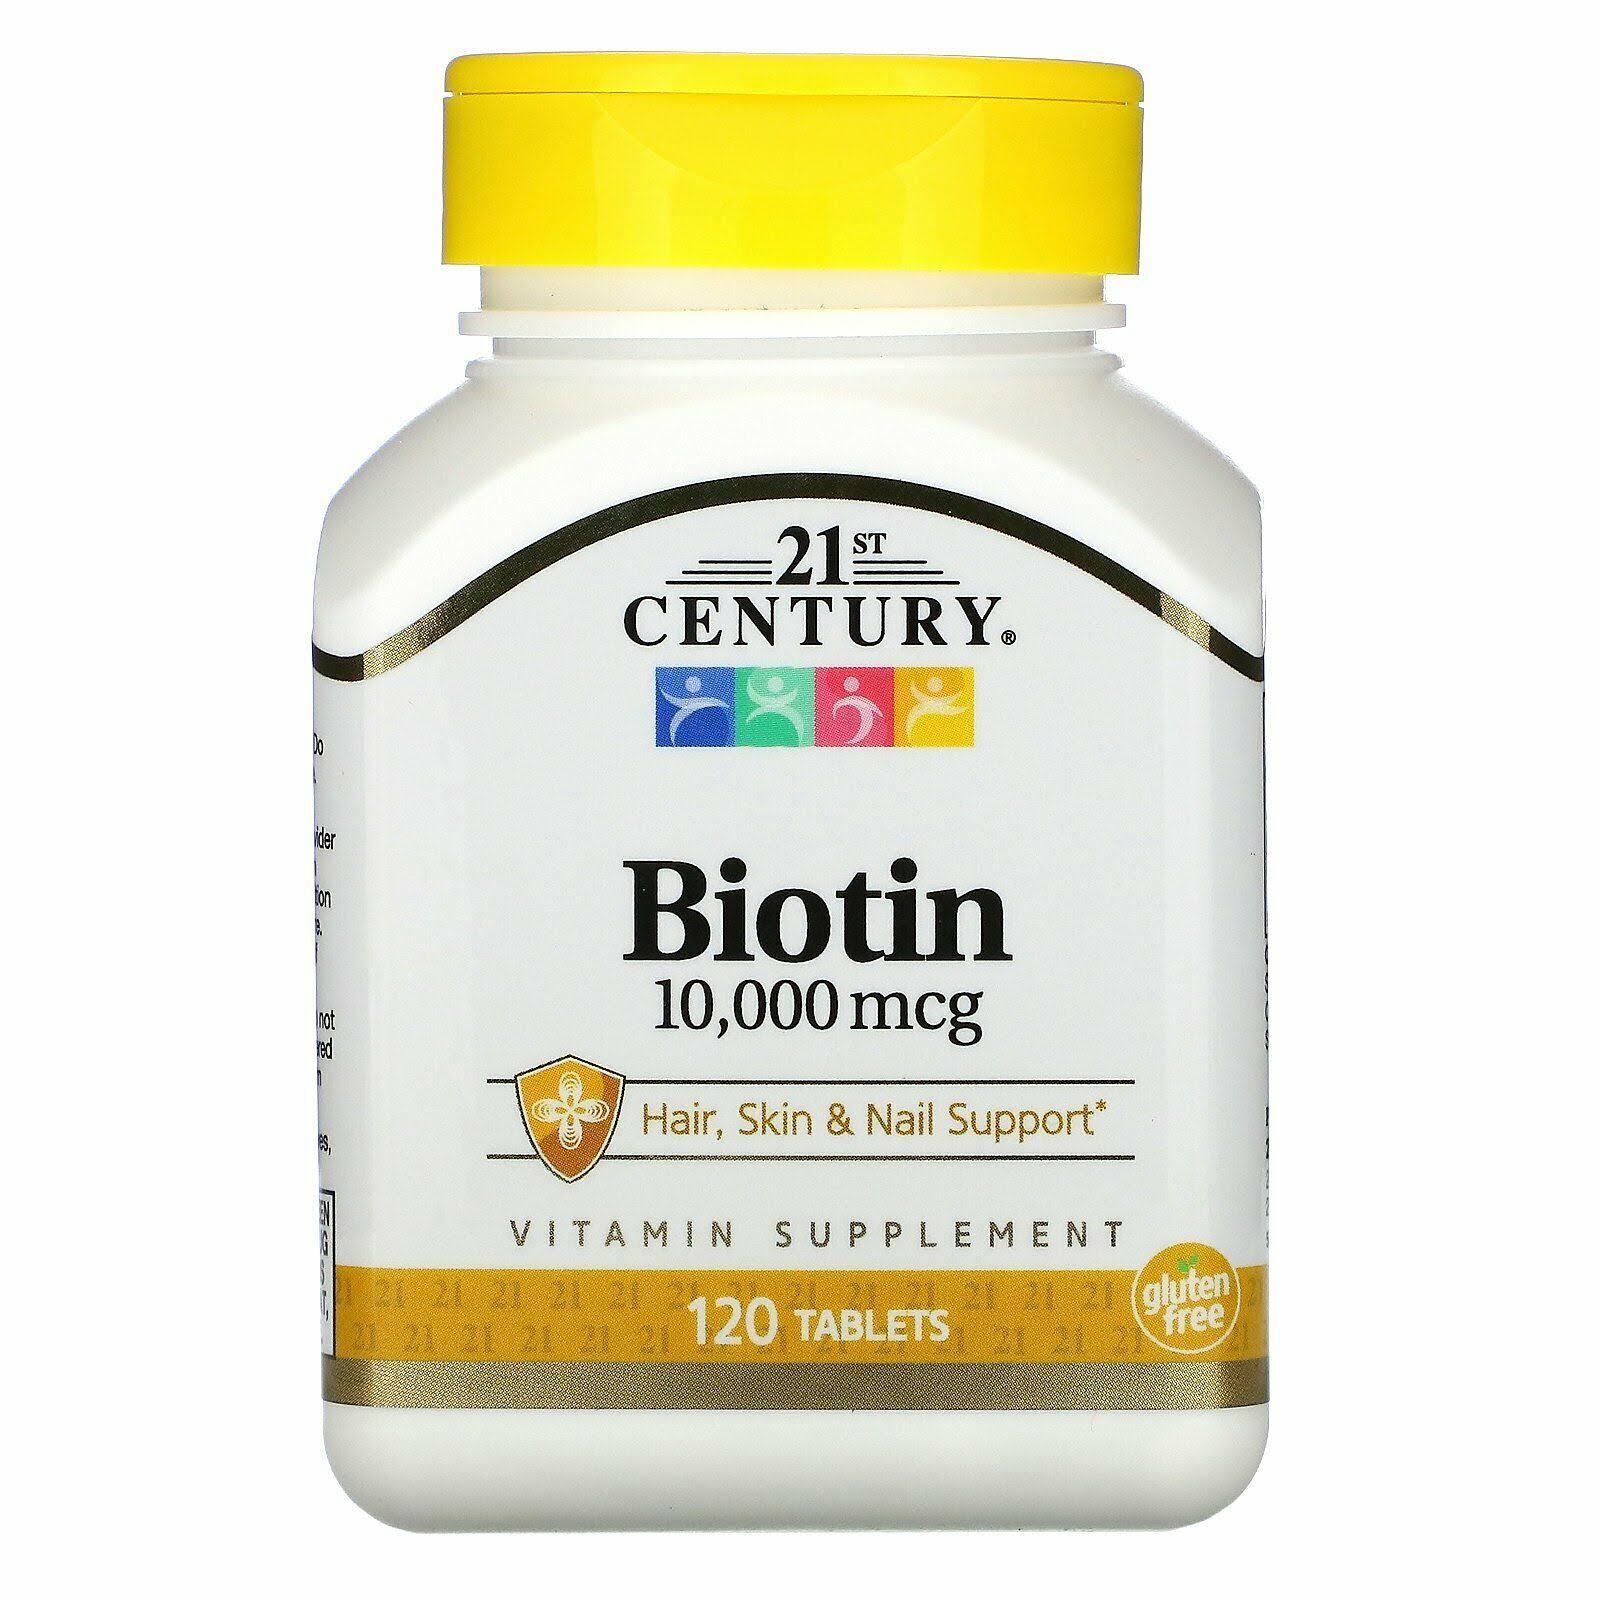 21st Century Biotin Vitamin Supplement - 10,000mcg, 120 Tablets